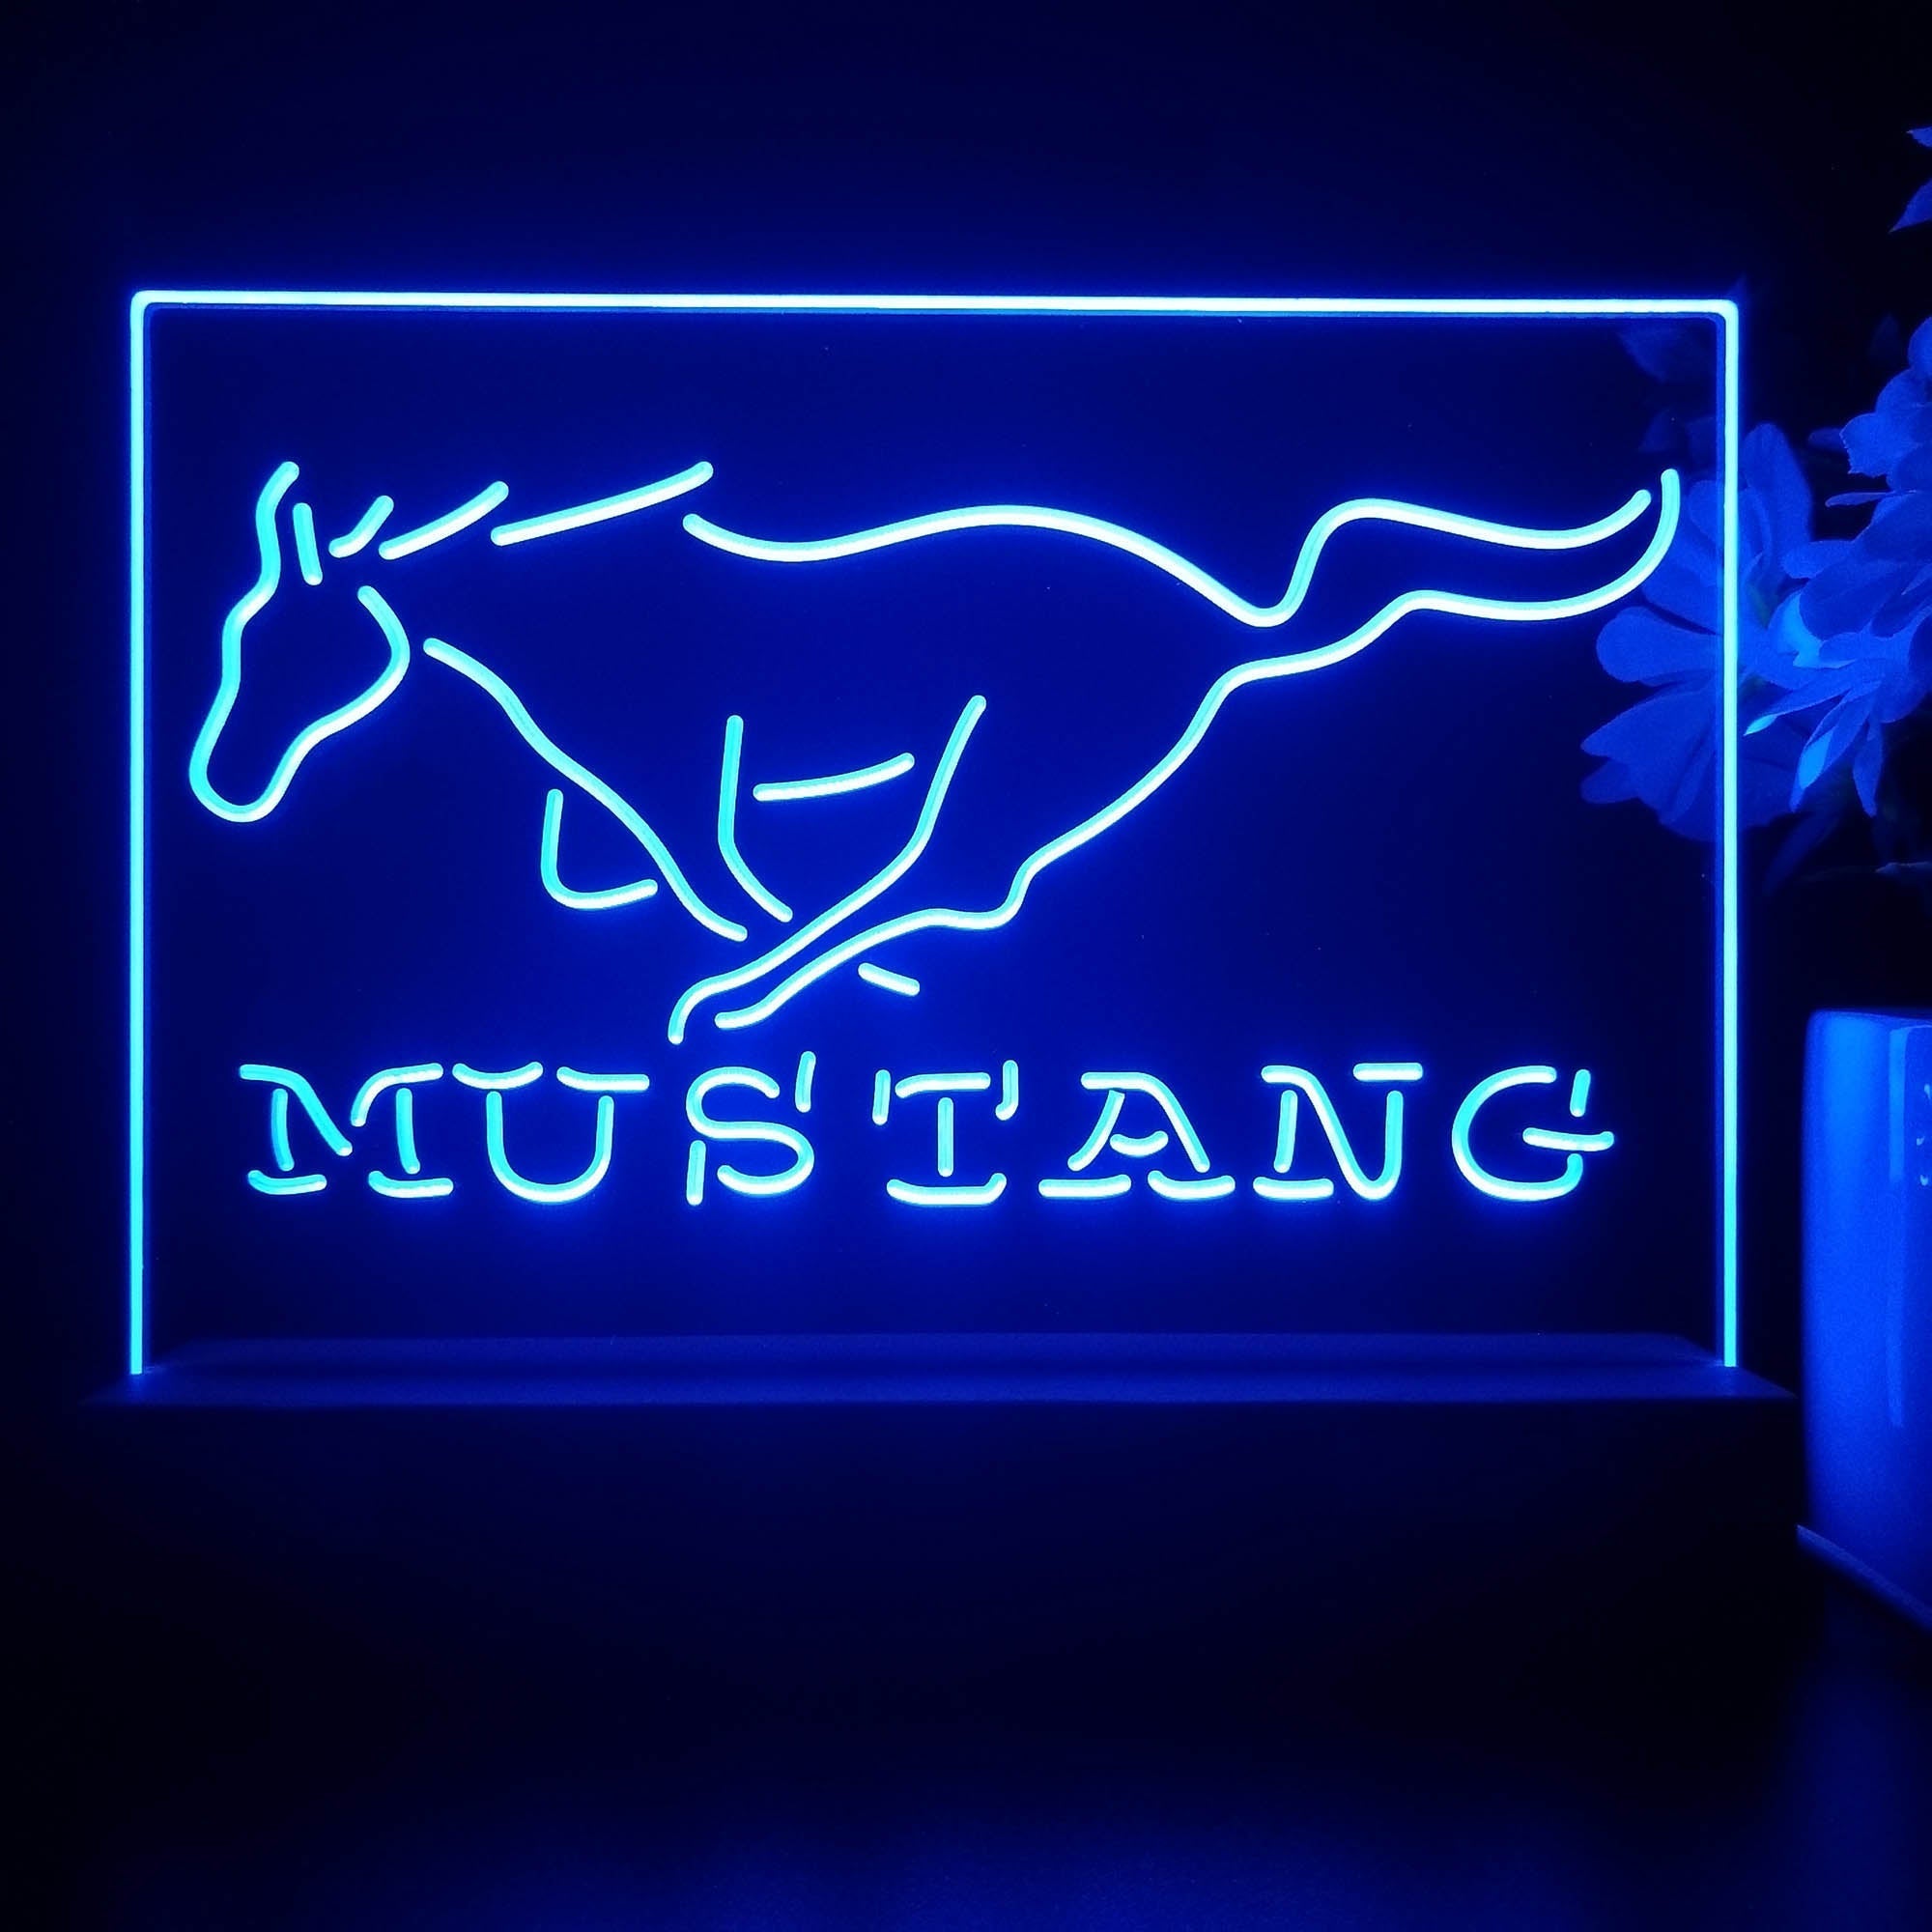 Mustang Ford 3D Illusion Night Light Desk Lamp